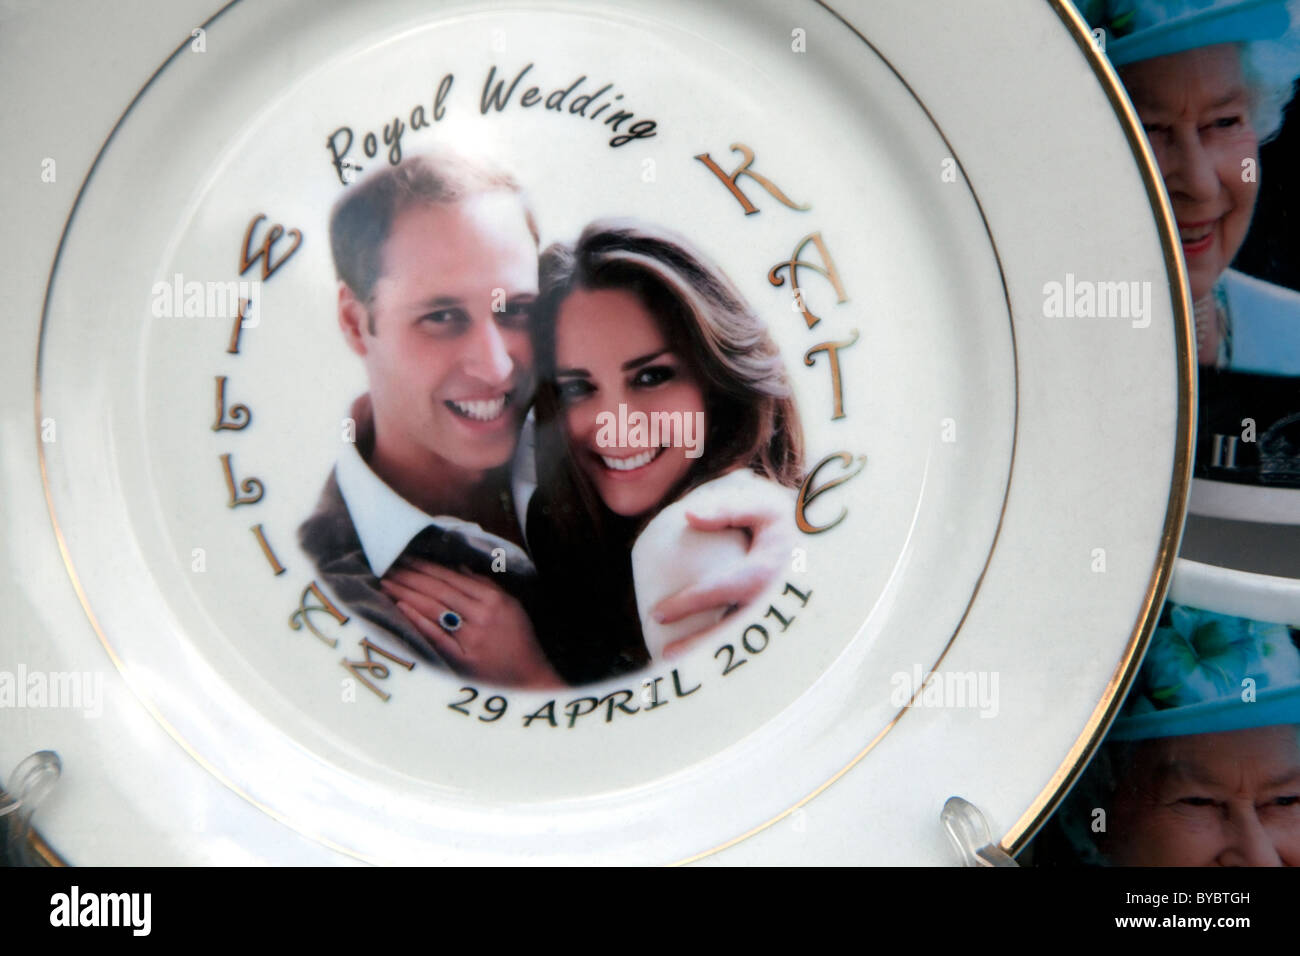 Royal wedding souvenirs for Prince William & Kate Middleton Stock Photo